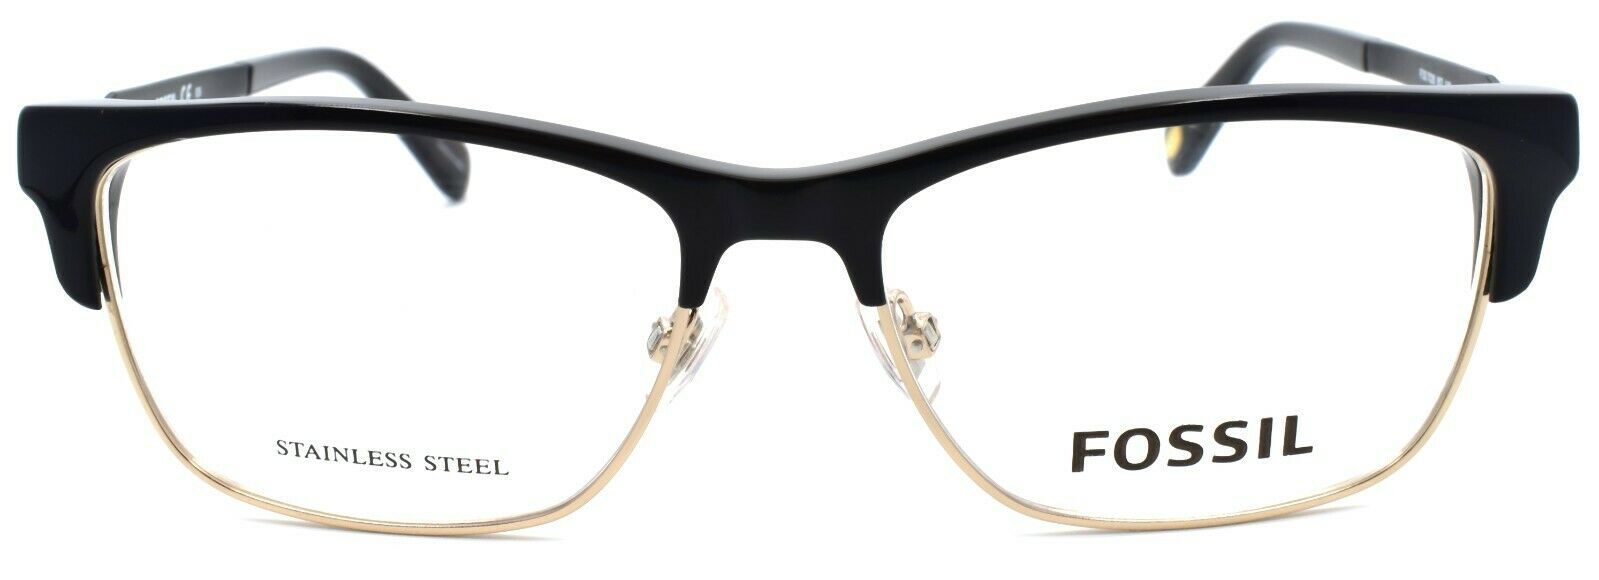 2-Fossil FOS 7026 807 Women's Eyeglasses Frames 52-15-140 Black-716736022529-IKSpecs